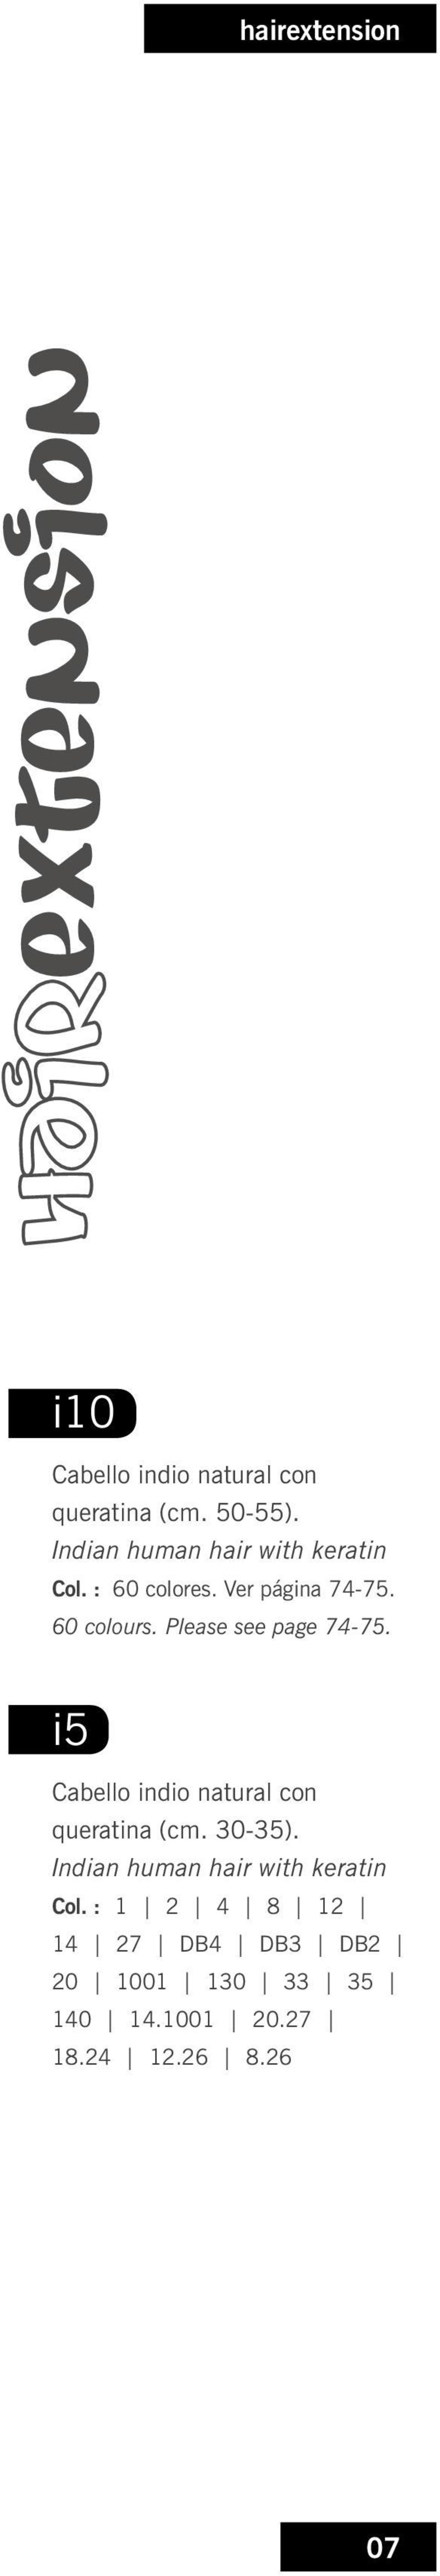 Please see page 74-75. i5 Cabello indio natural con queratina (cm. 30-35).